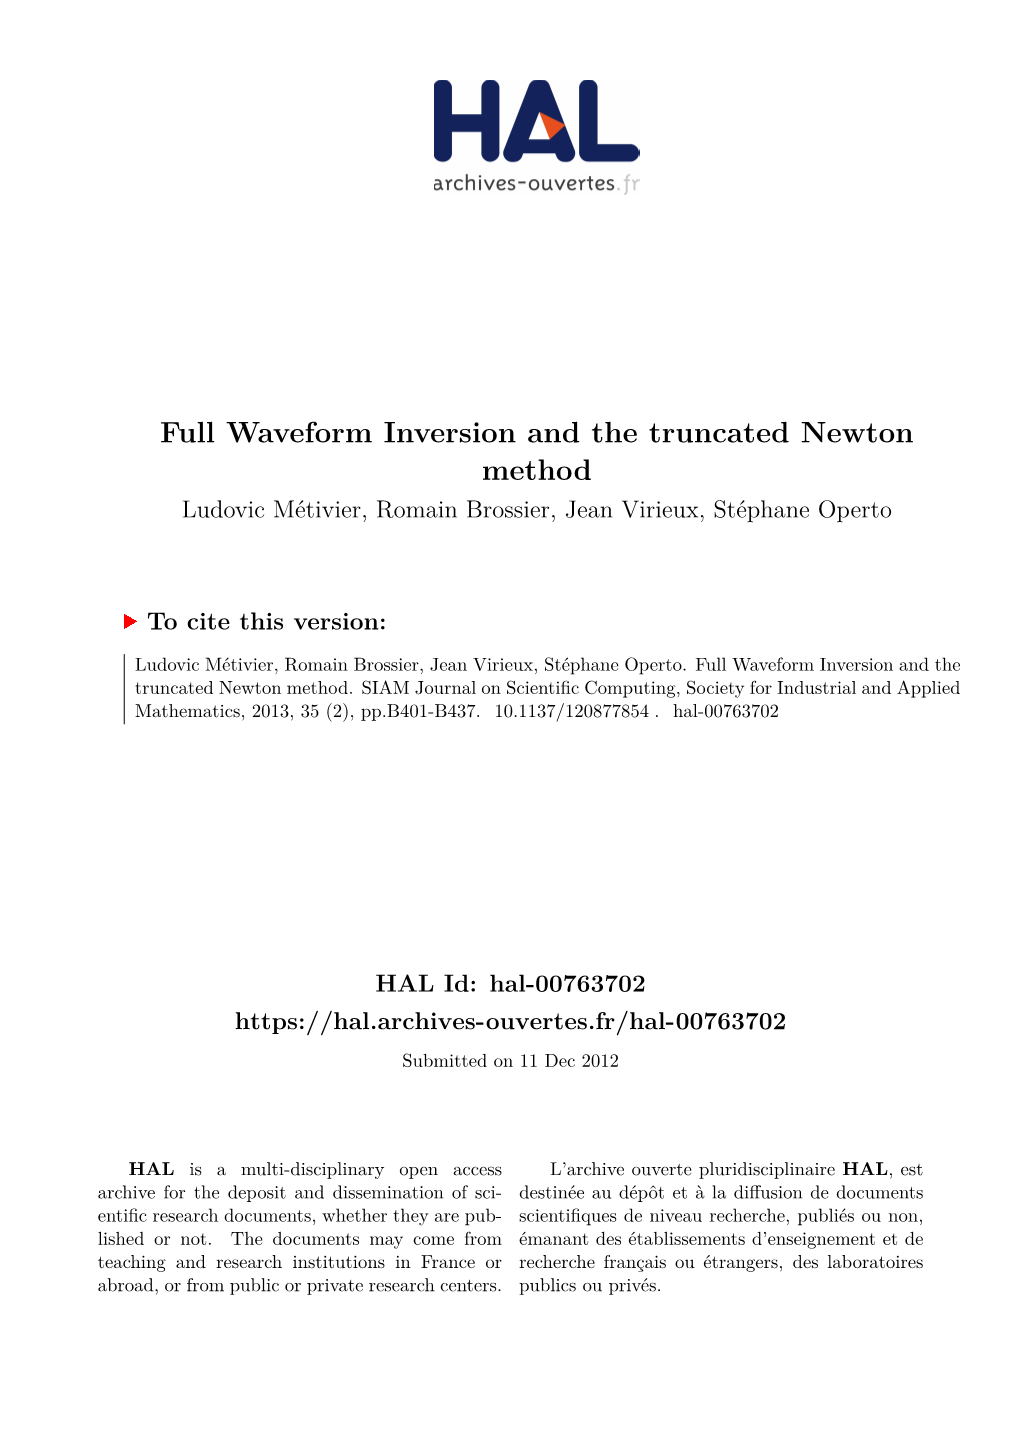 Full Waveform Inversion and the Truncated Newton Method Ludovic Métivier, Romain Brossier, Jean Virieux, Stéphane Operto